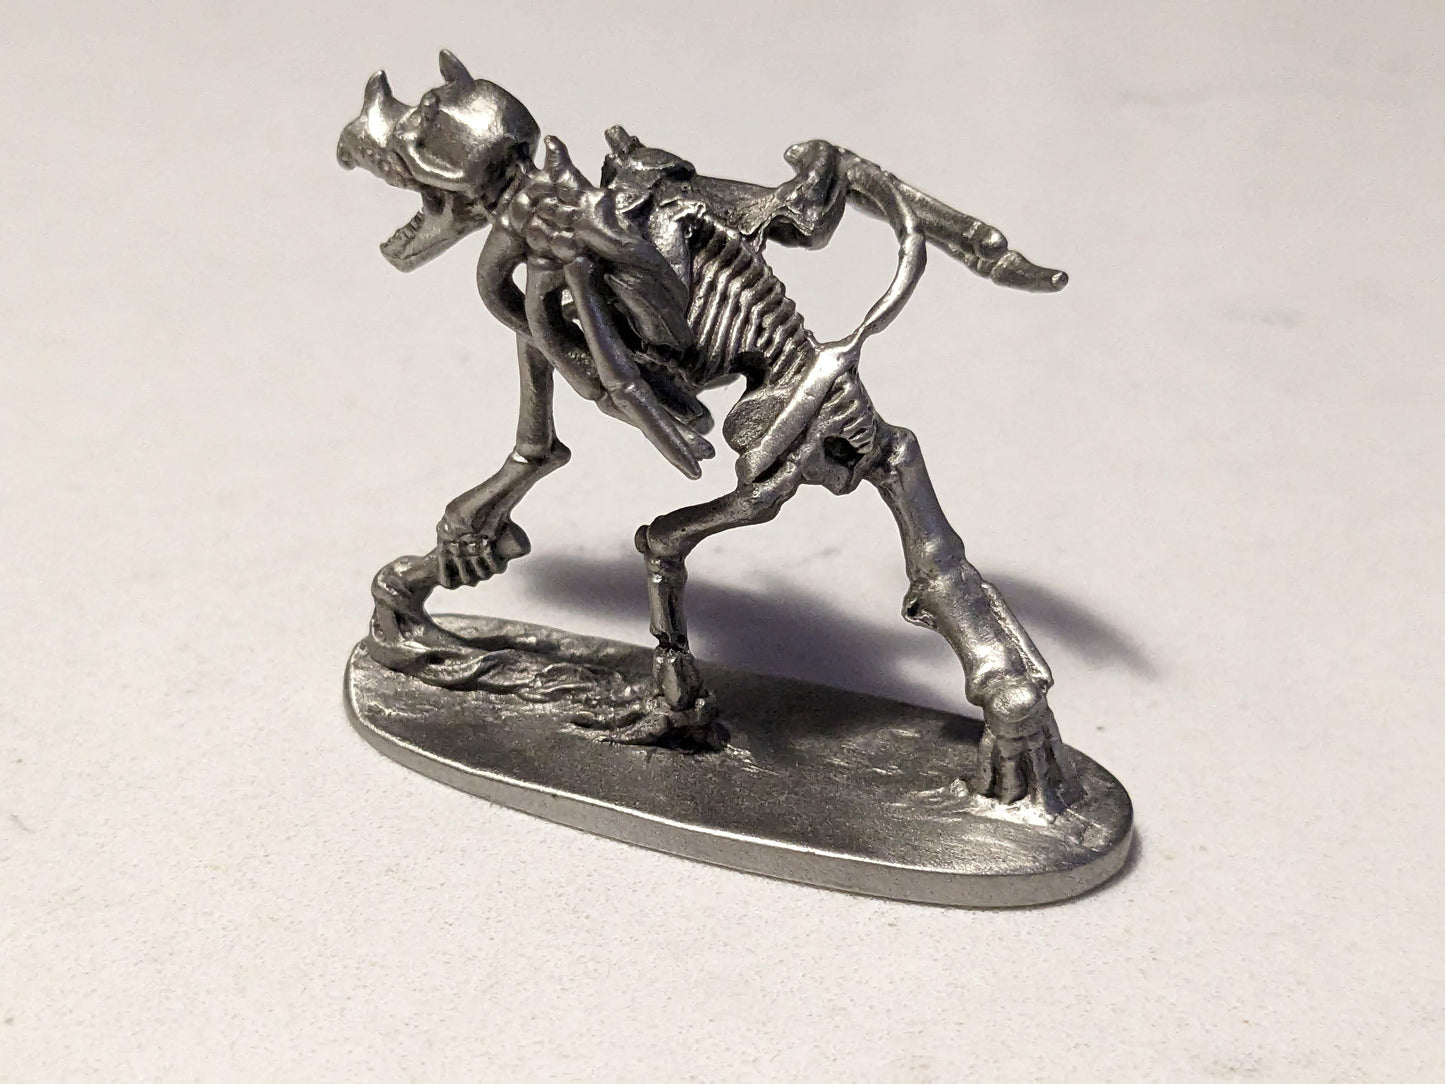 Zombie Balrog (Dungeons & Dragons Pewter Figurine) - Rare Vintage Miniature